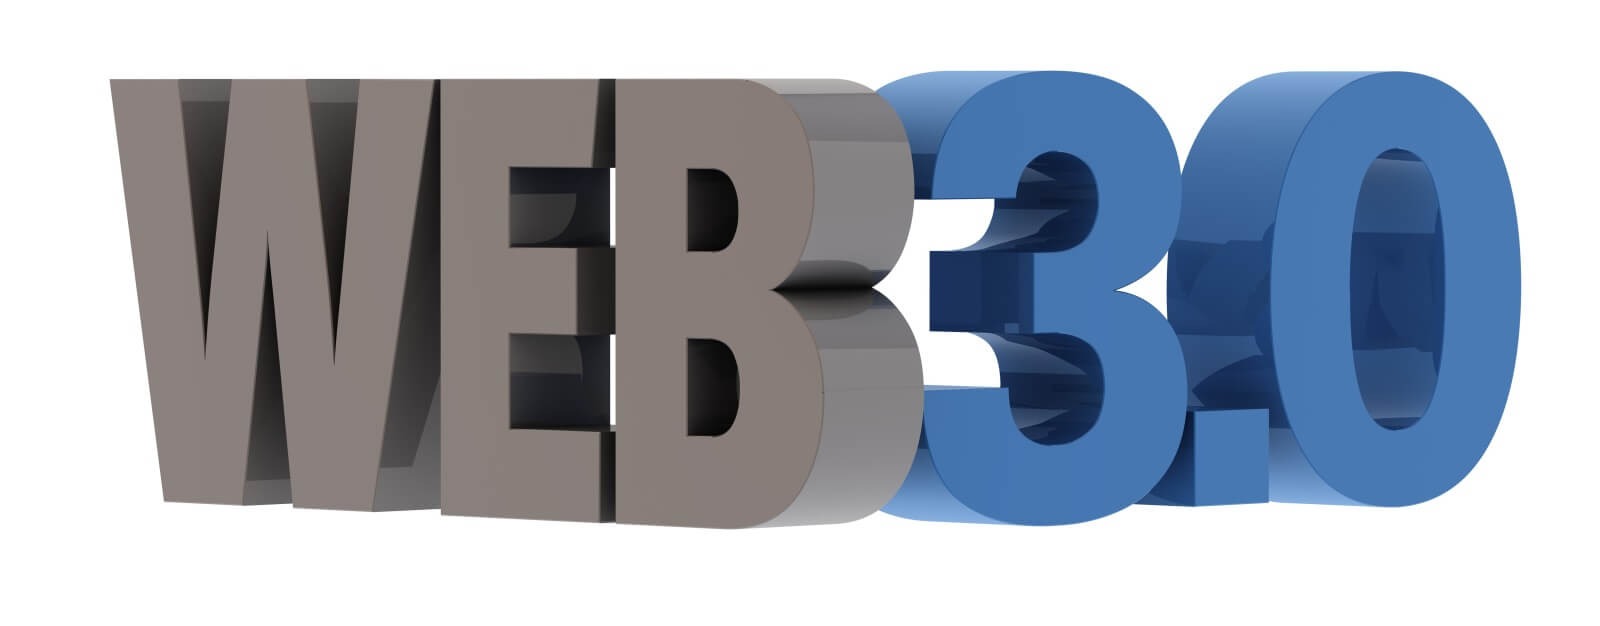 Web3 token. Web3. Веб 3.0. Web3 картинка. Web3 логотип.